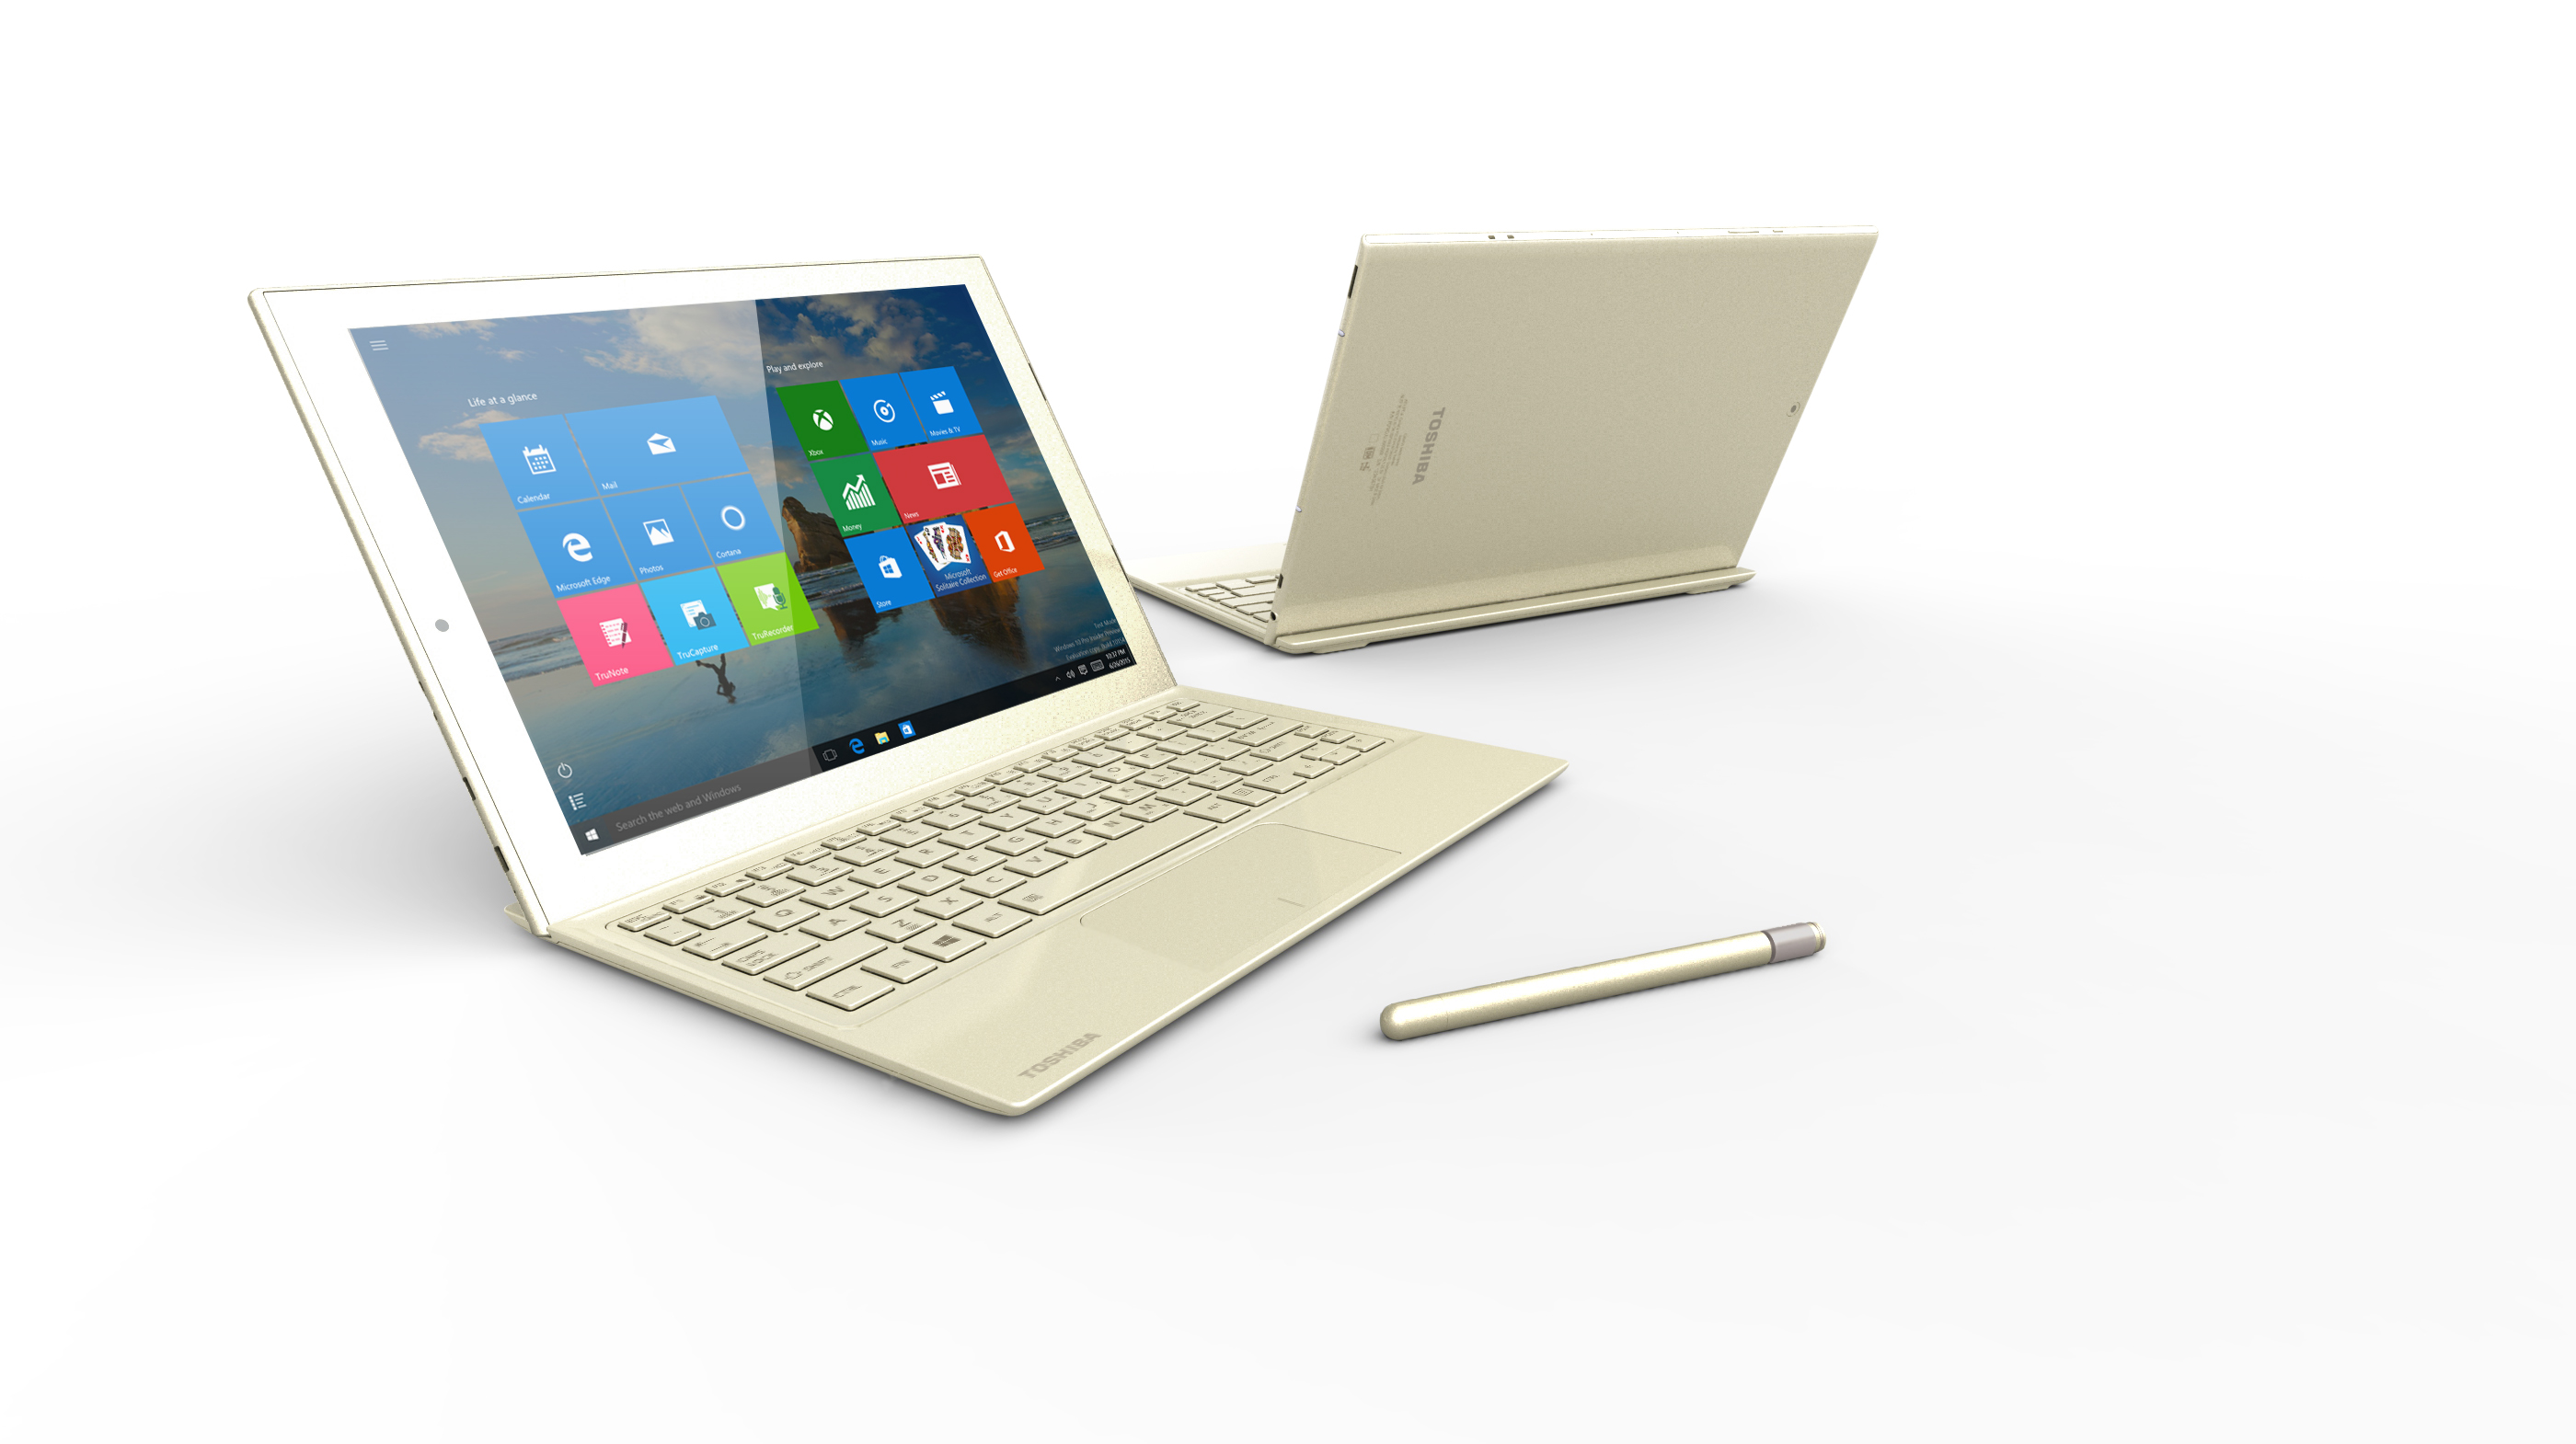 Toshiba introduces a Unique Windows 10 Tablet, the dynaPad